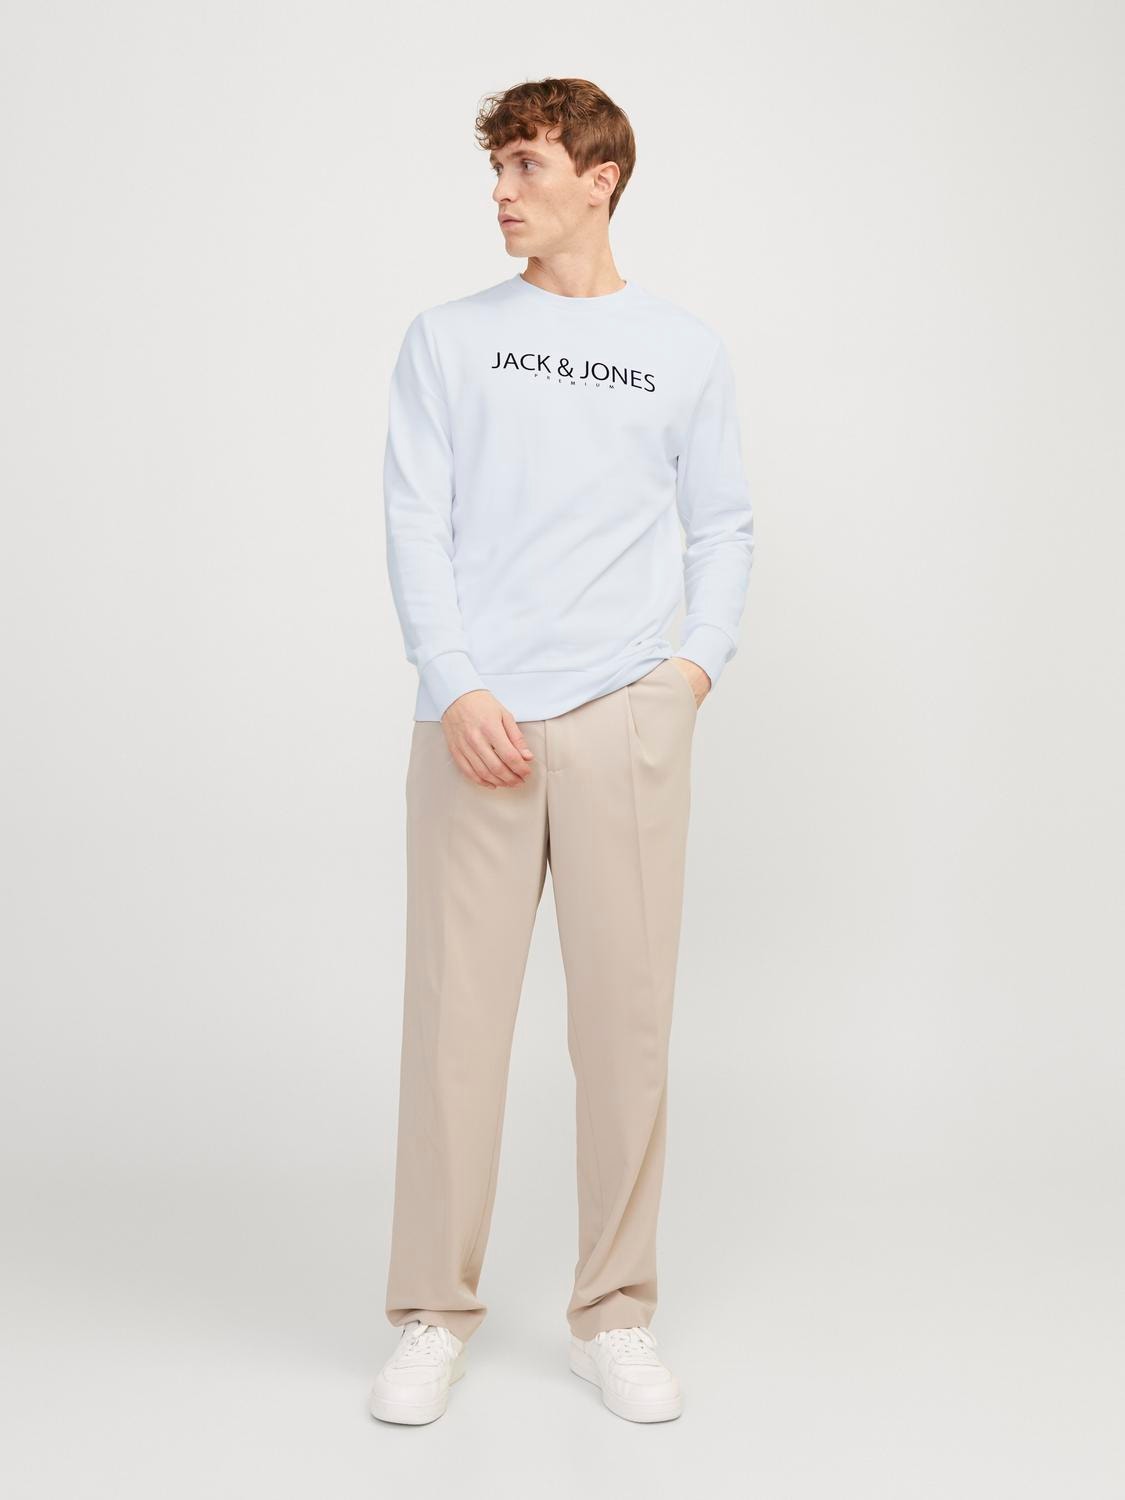 Jack & Jones Printed Crew neck Sweatshirt -Bright White - 12256972